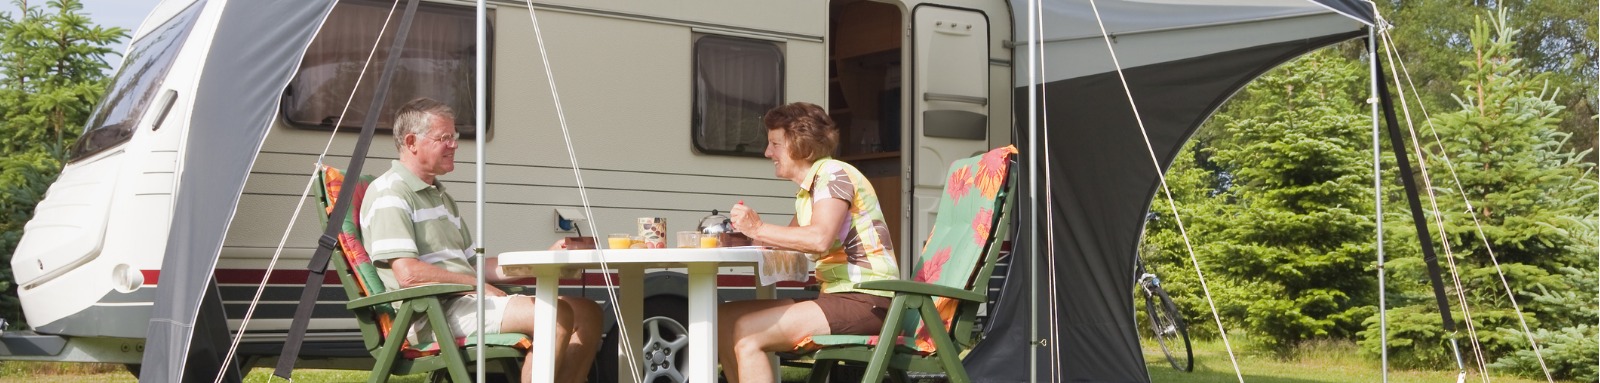 Two friends sitting outside the caravan under tent enjoying breakfast & nice weather.